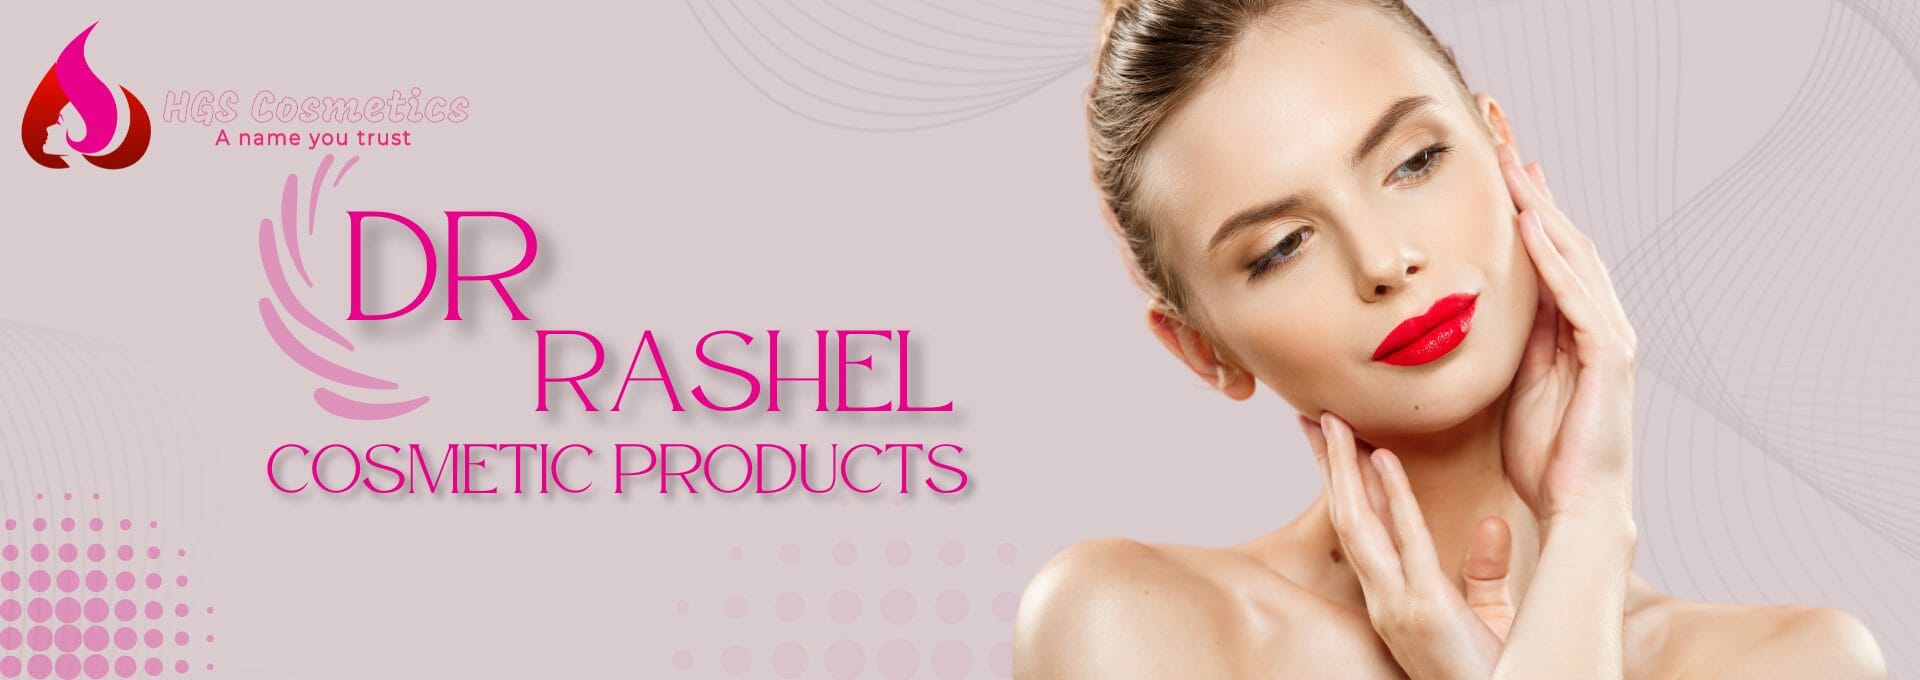 Buy Original Dr Rashel Products Online in Pakistan @ HGS Cosmetics